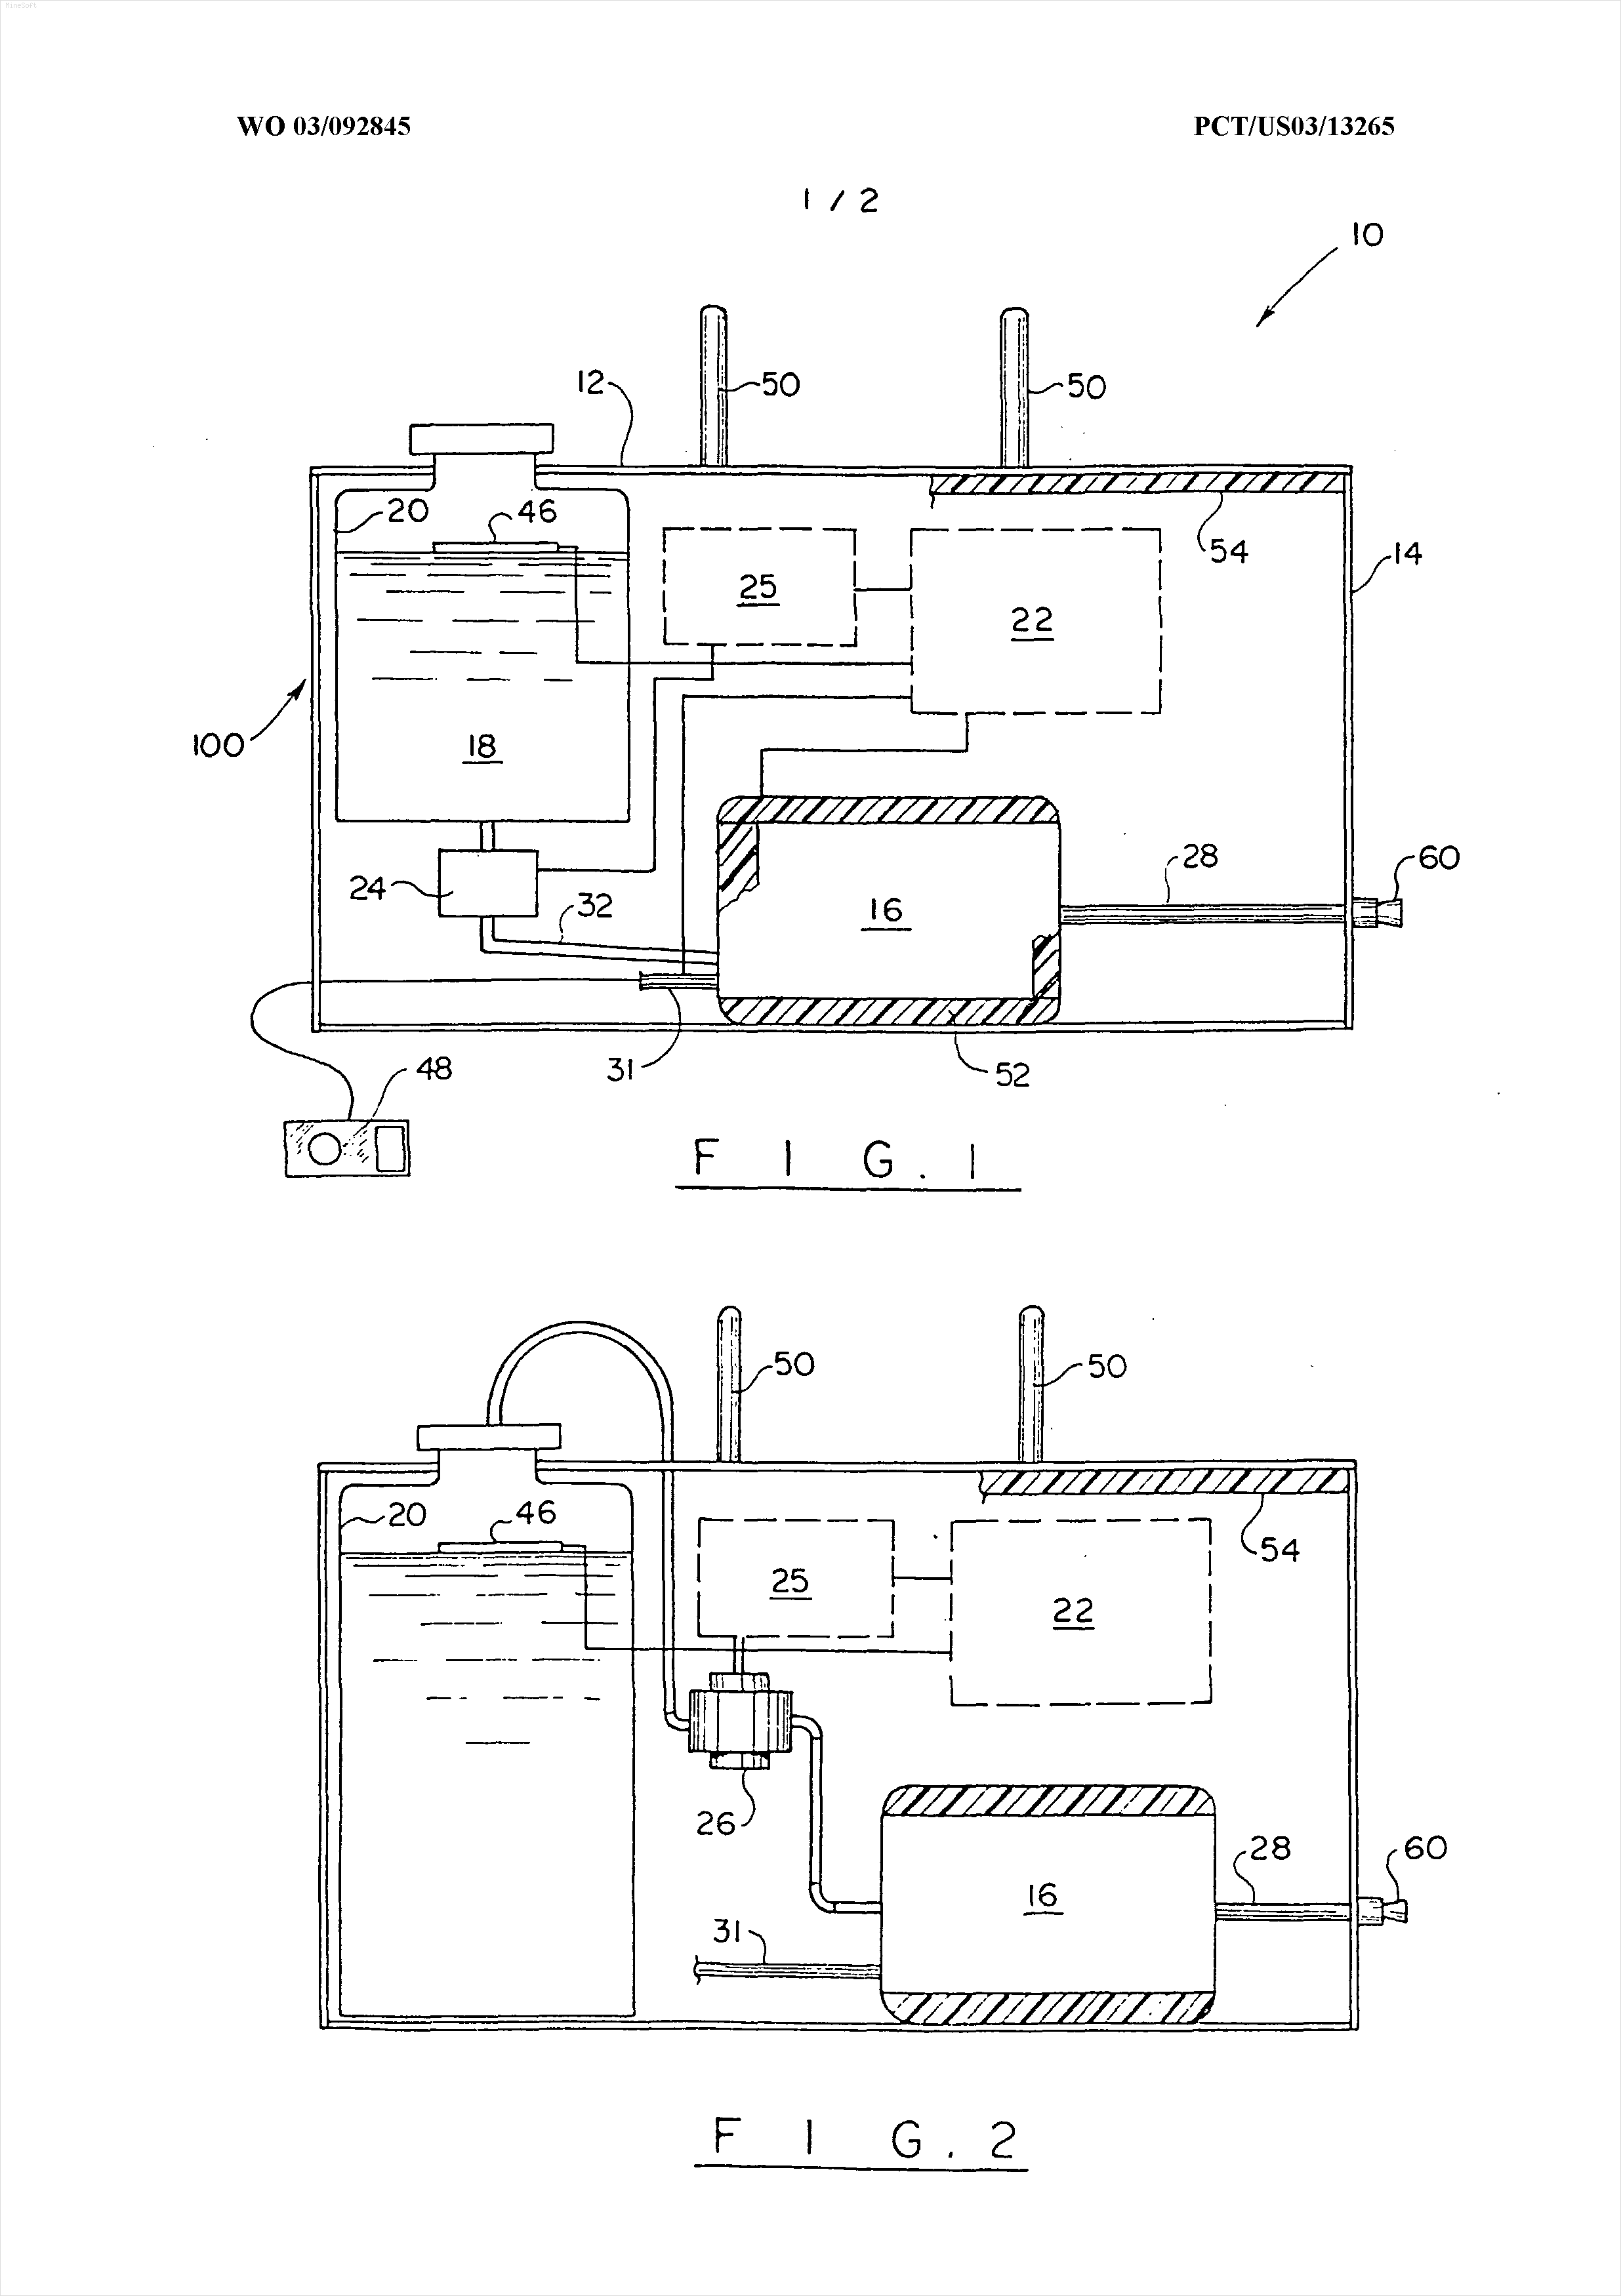 Fog machine patent image